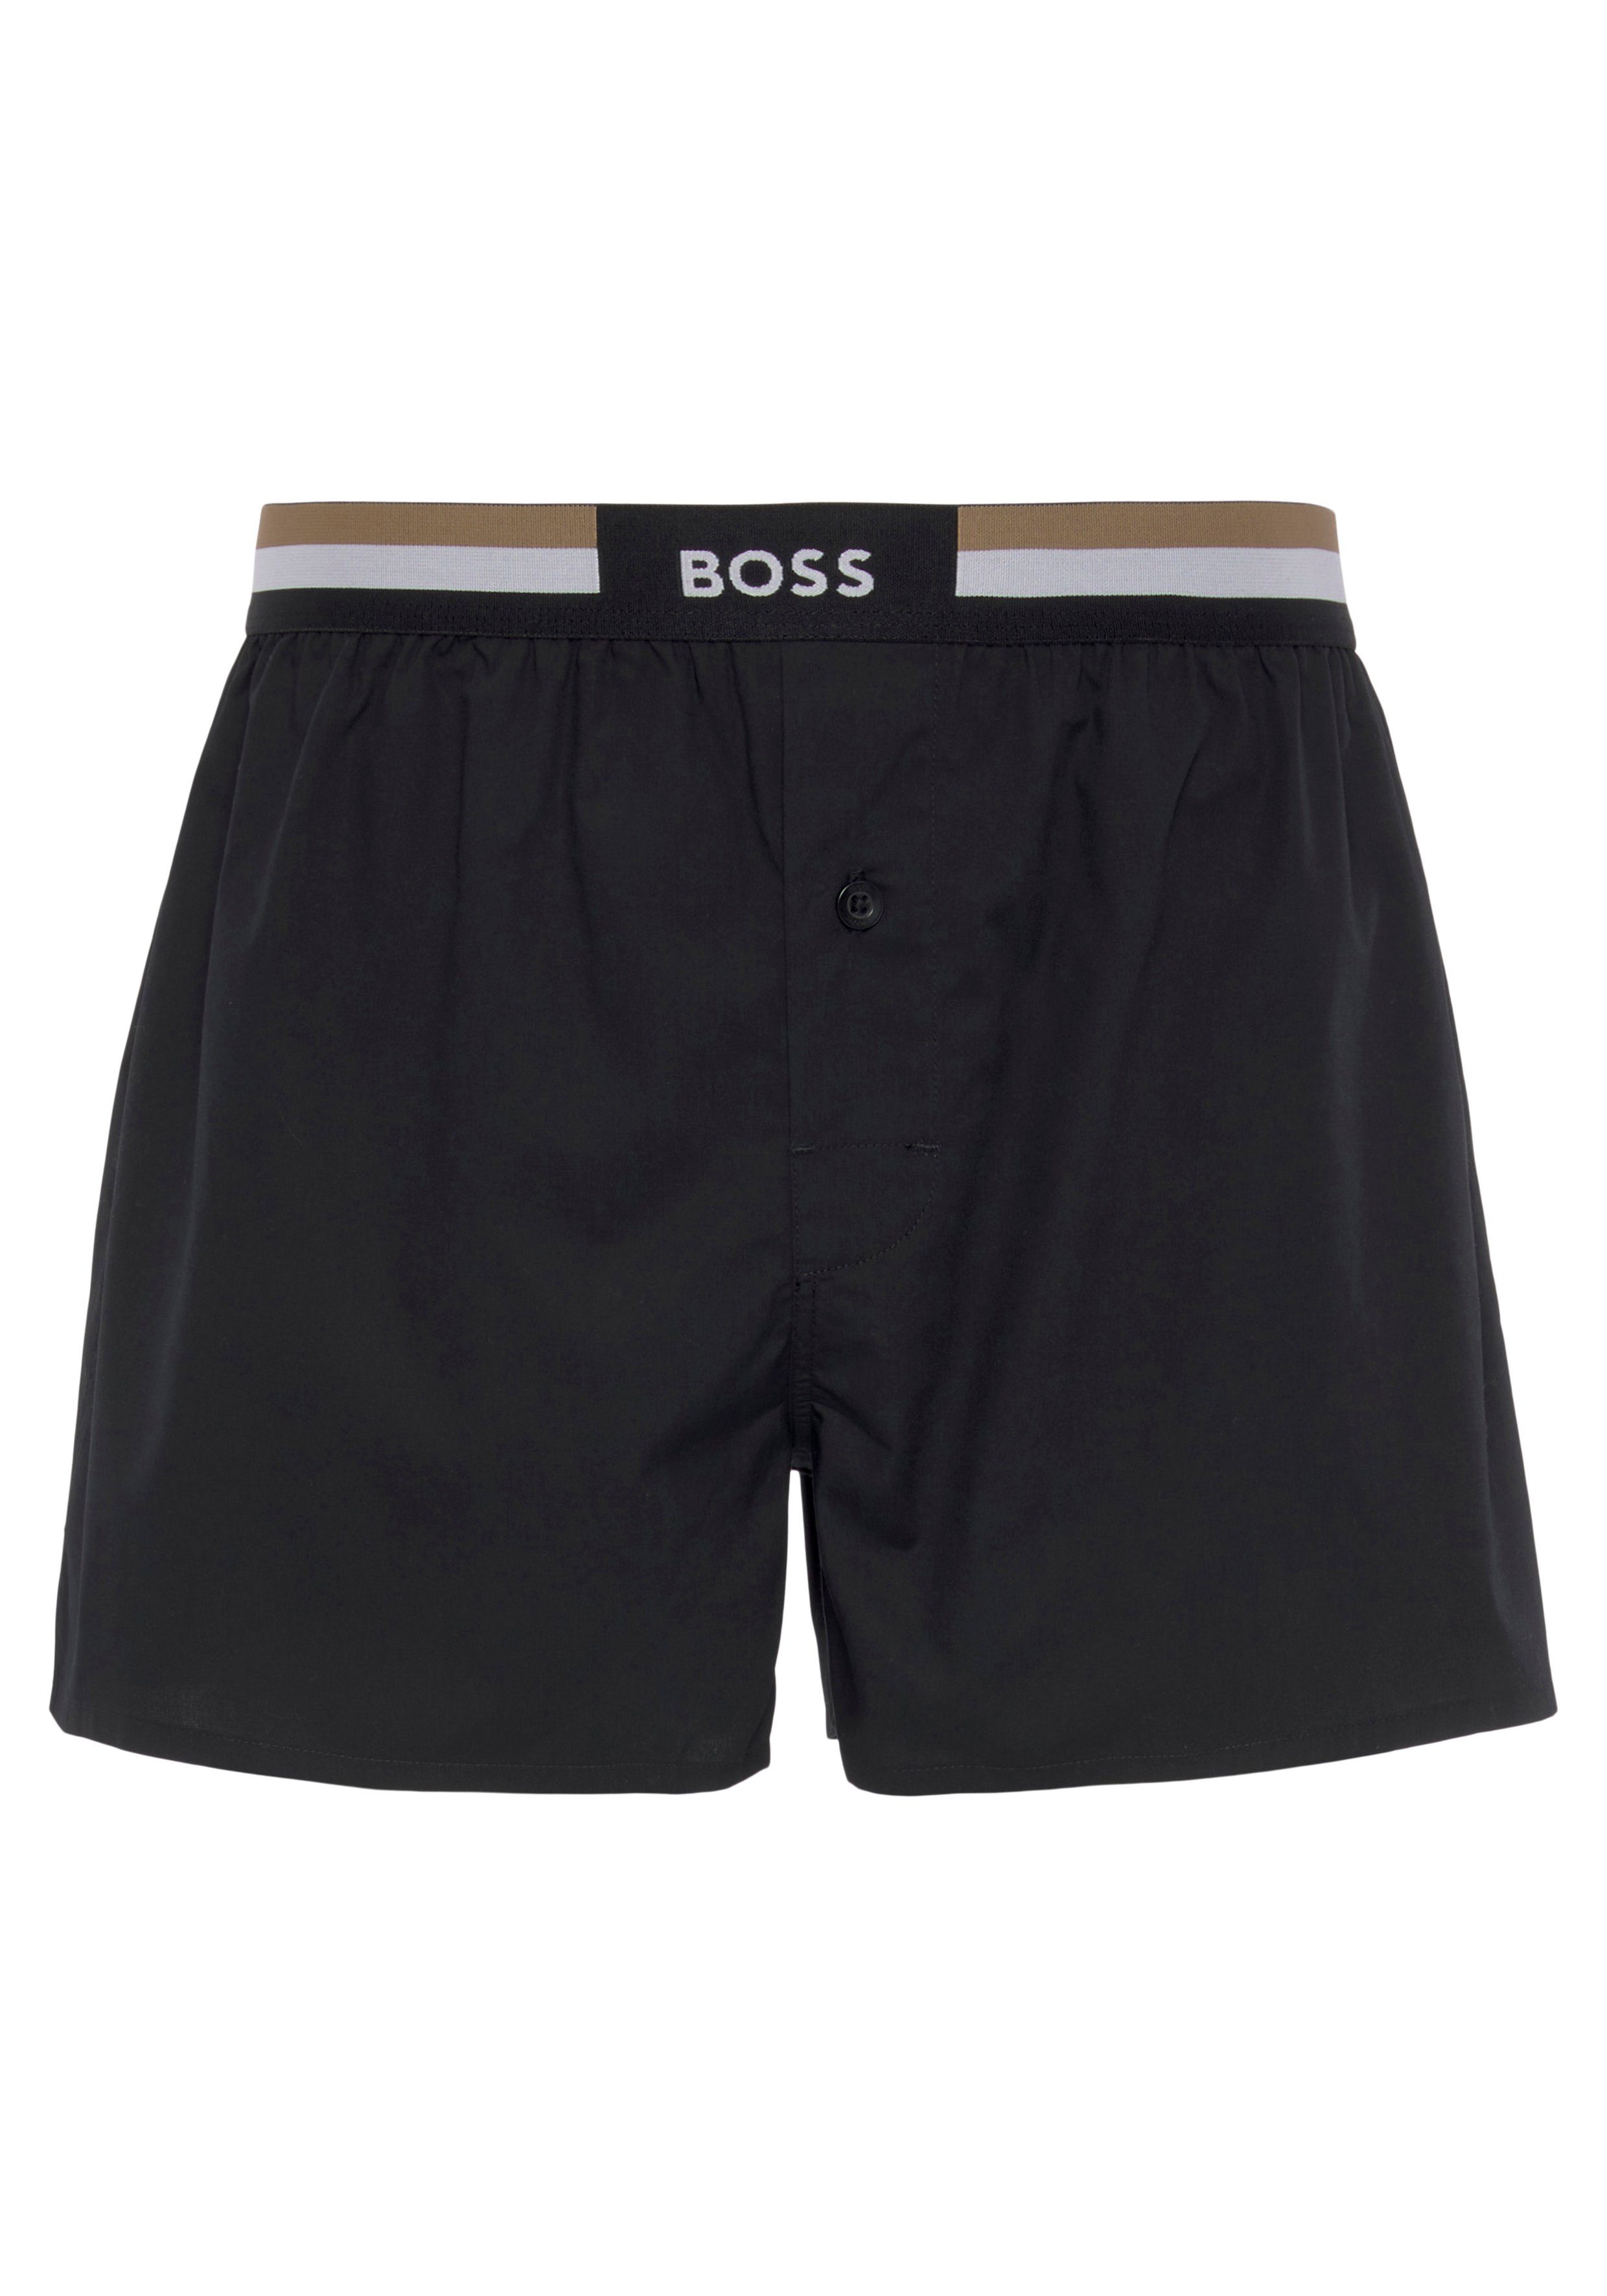 2P EW BOSS Knopfverschluss mit 2-St) Light/Pastel_Green Shorts Boxershorts (Packung, Boxer